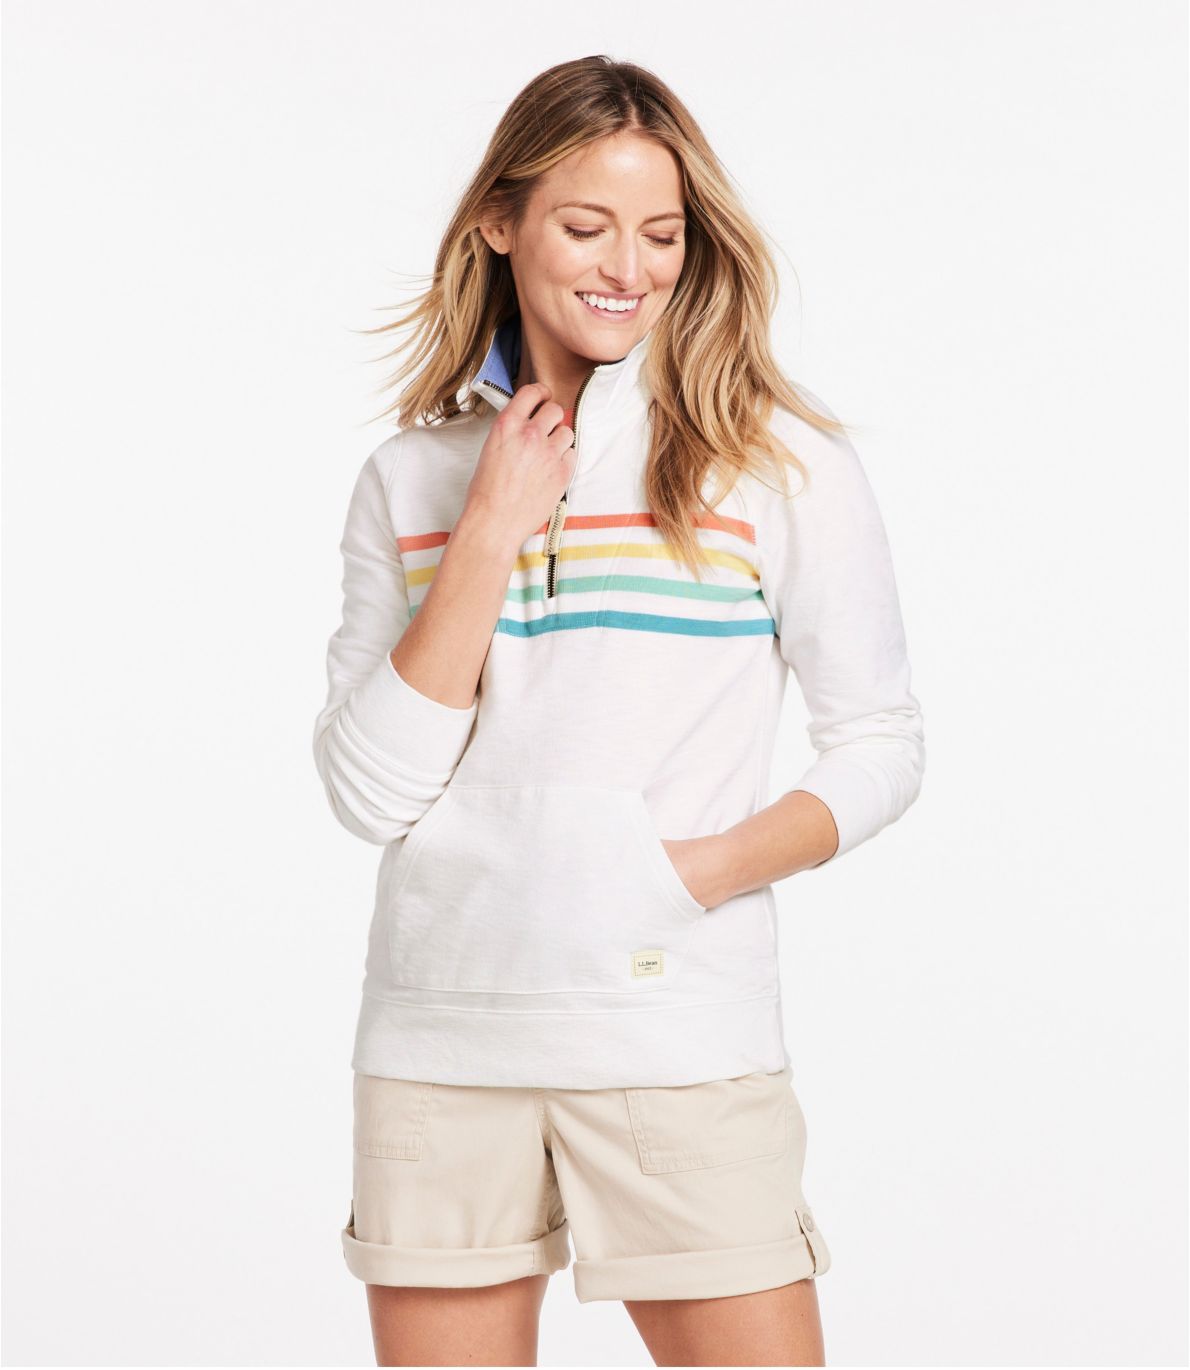 Women's Organic Cotton Sweatshirt, Quarter-Zip Pullover Stripe